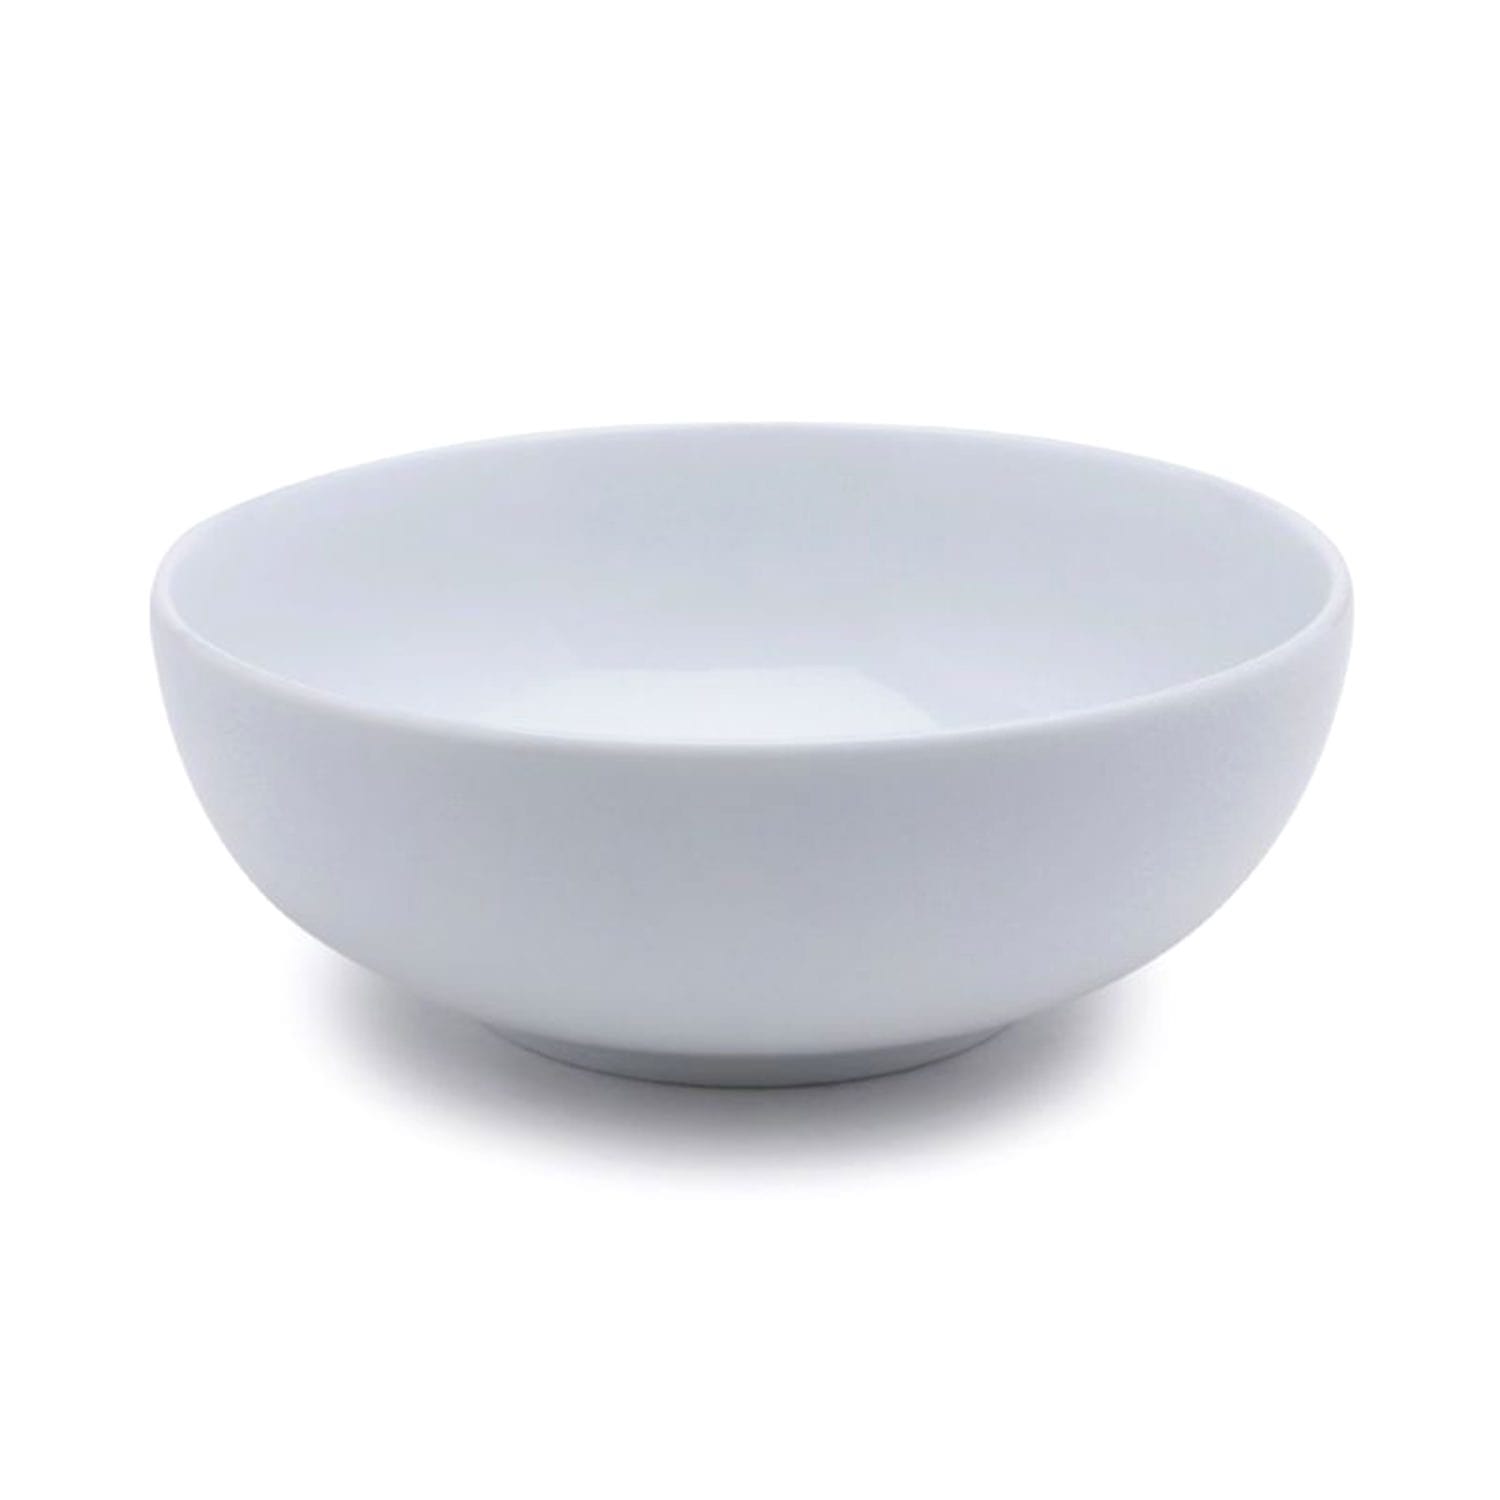 Dankotuwa Purity Rice Bowl - White, 801 ml - 3650 - Jashanmal Home